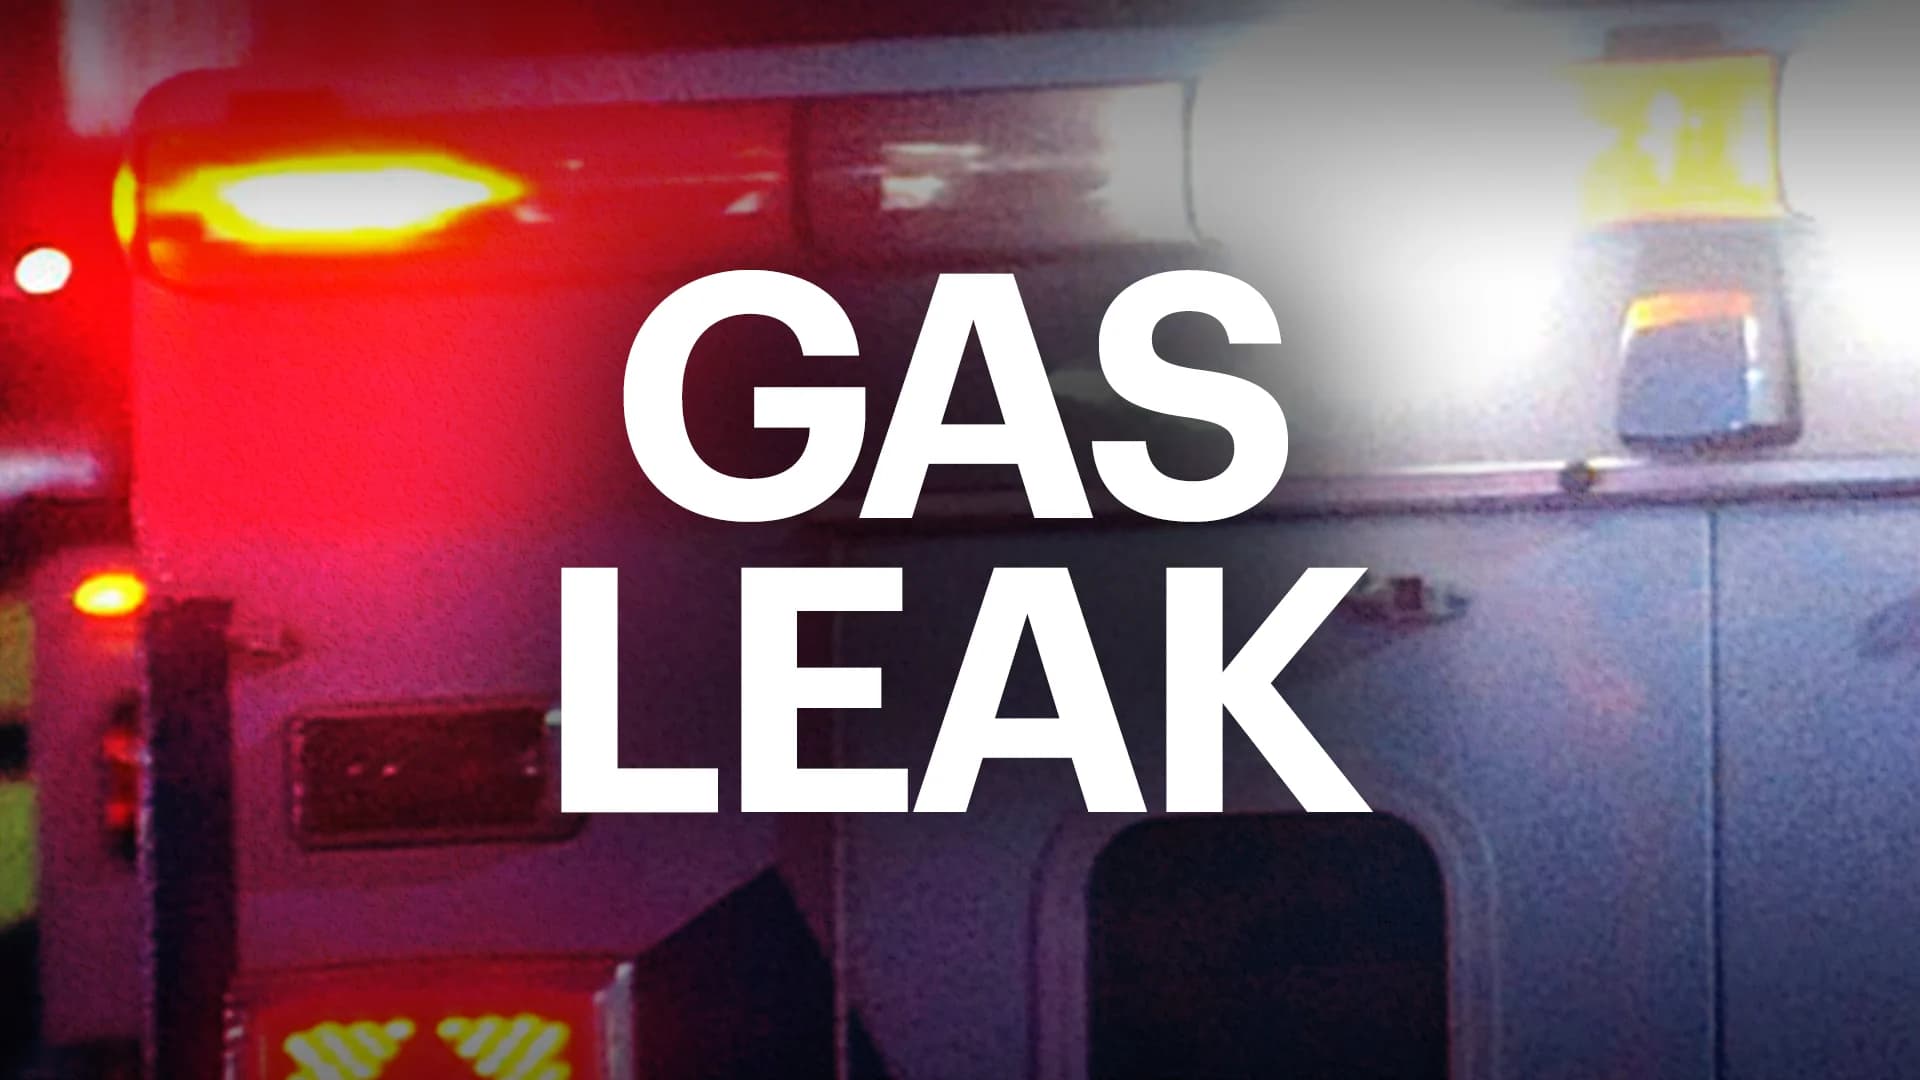 Gas leak scare evacuates several buildings in Goshen